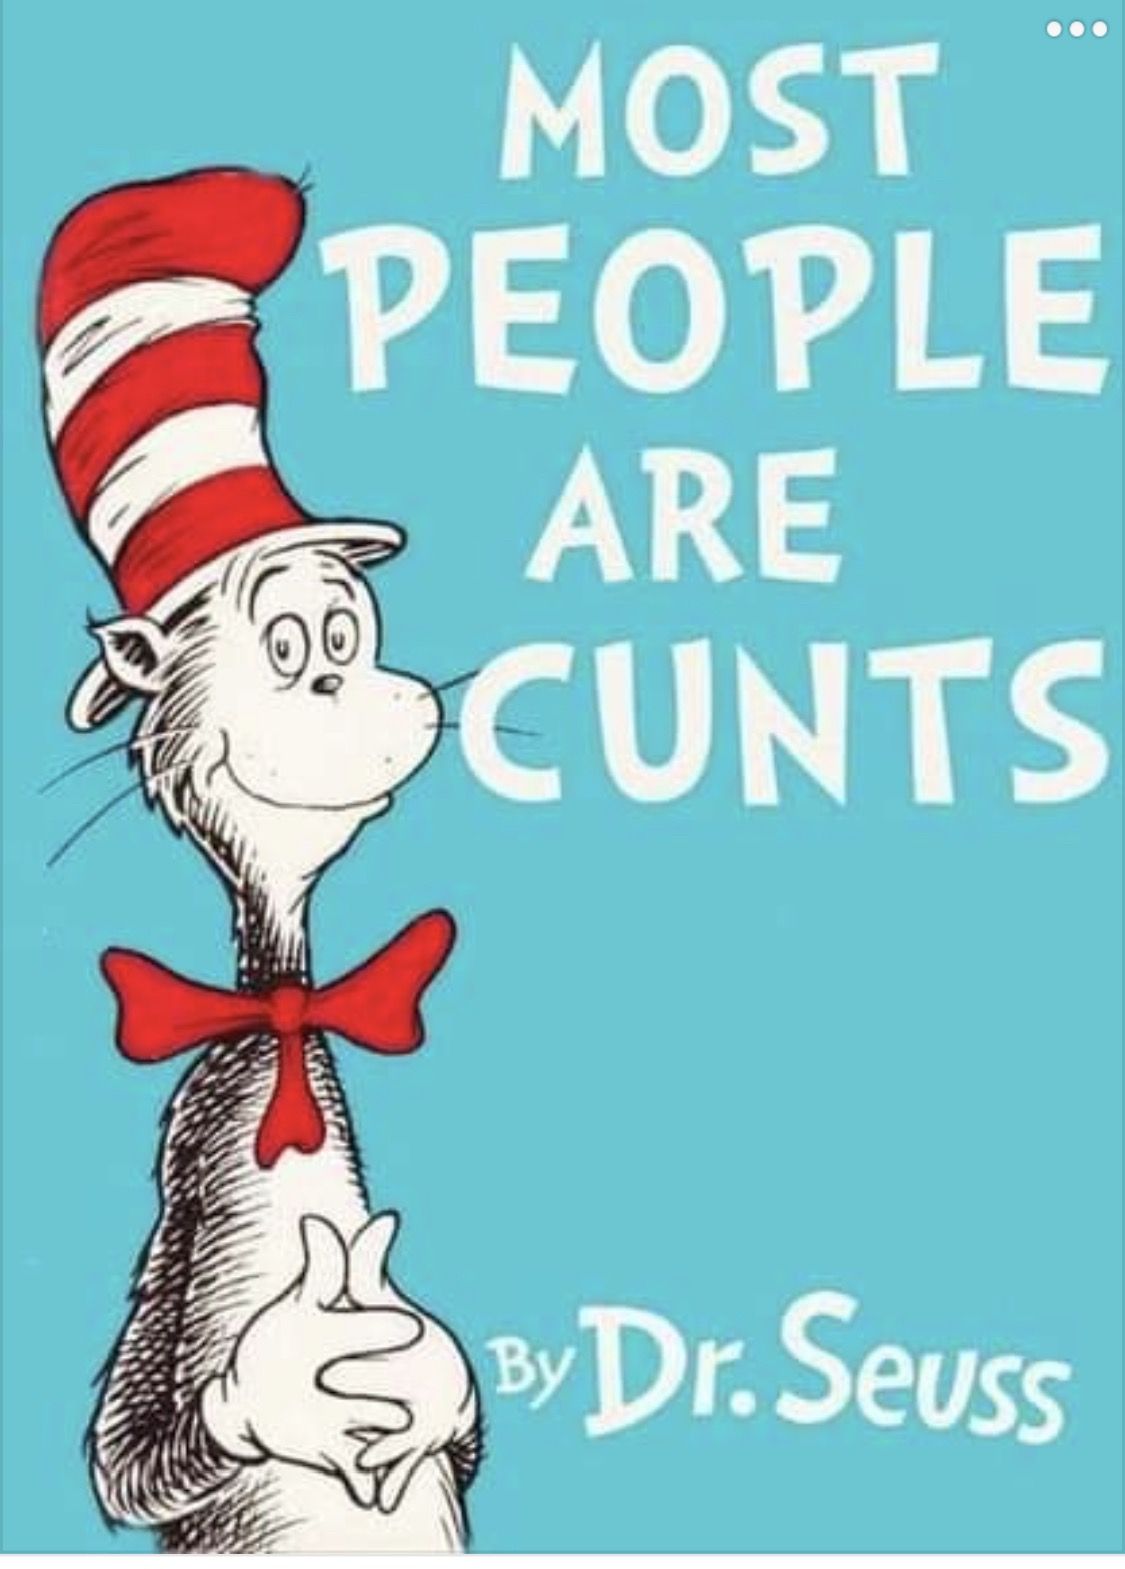 My favorite Dr. Seuss book